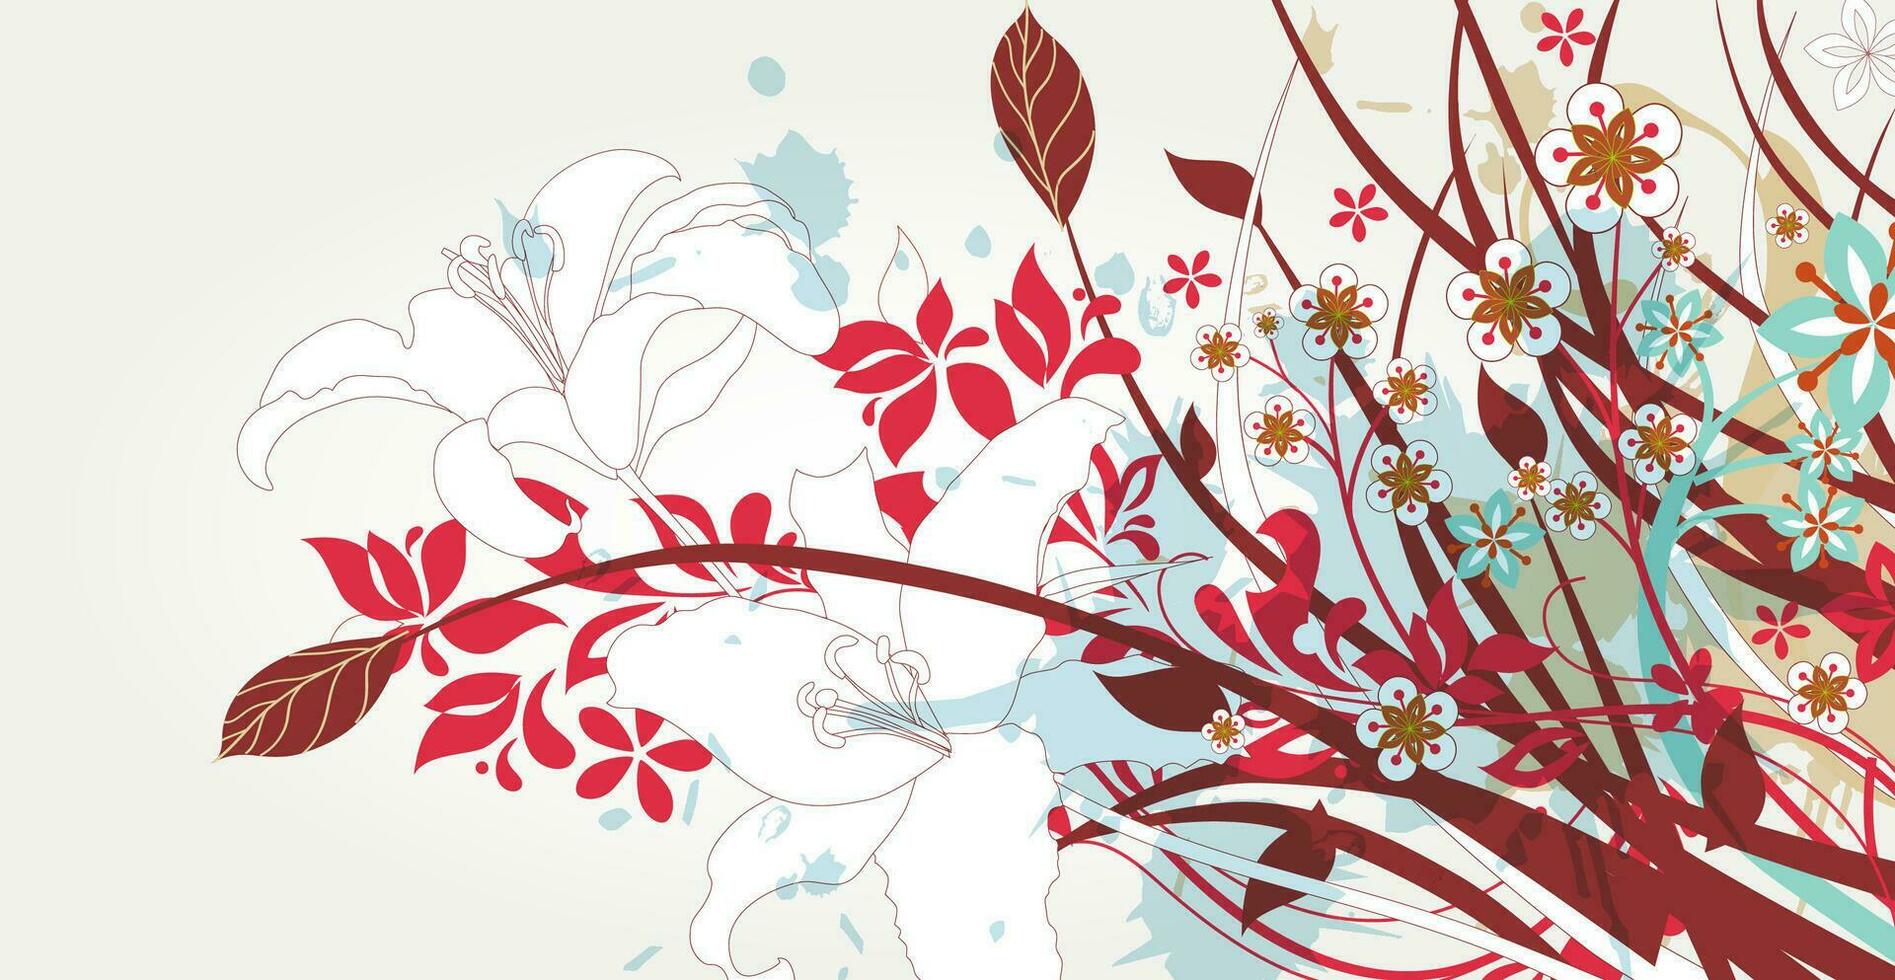 vistoso floral batik antecedentes. floral decoración chinos ilustración. cachemir impresión dibujado a mano elementos. vector